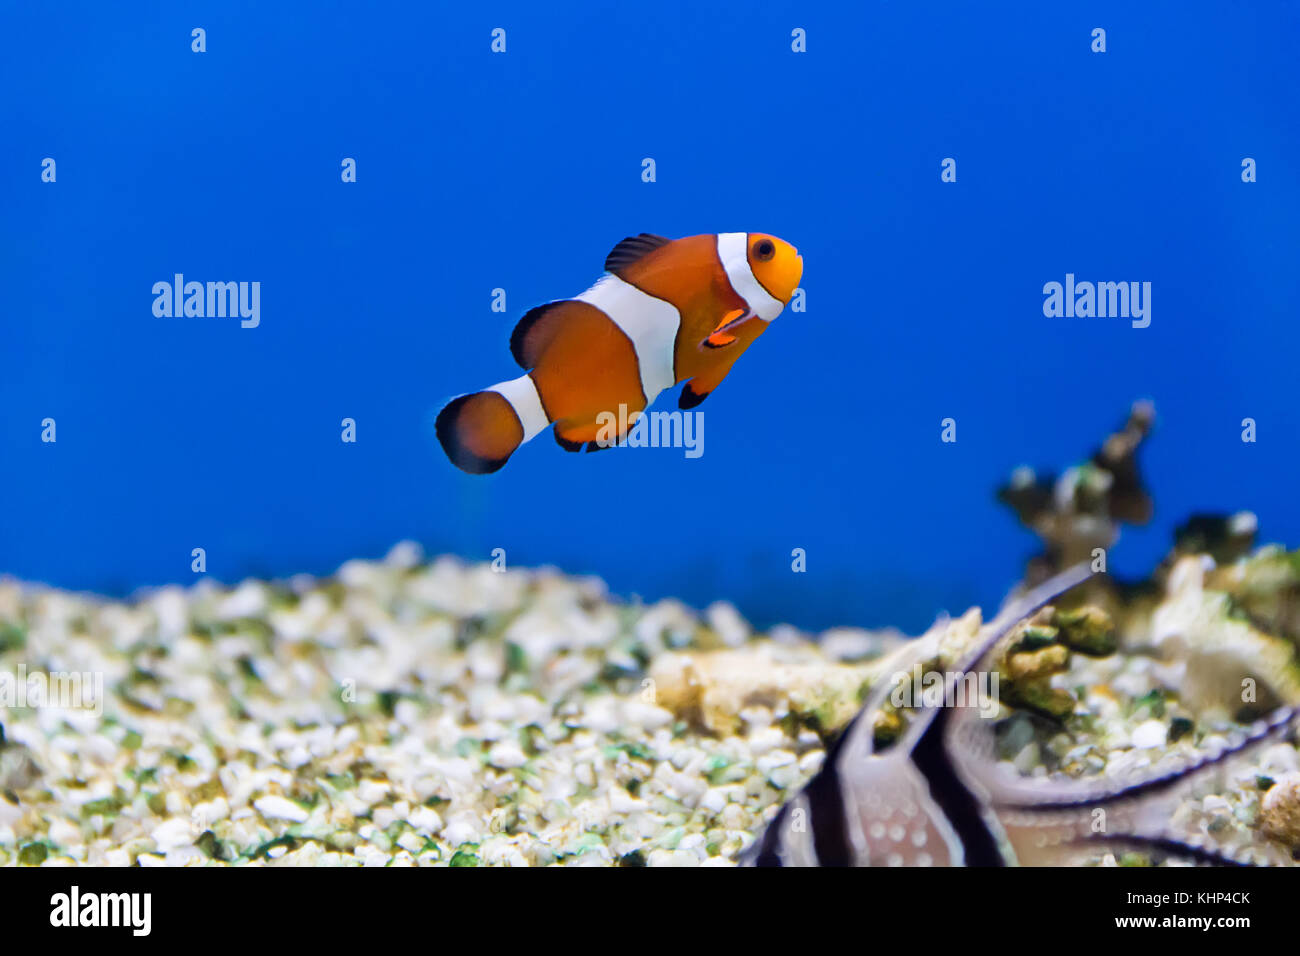 Image of clown fish in aquarium water Stock Photo